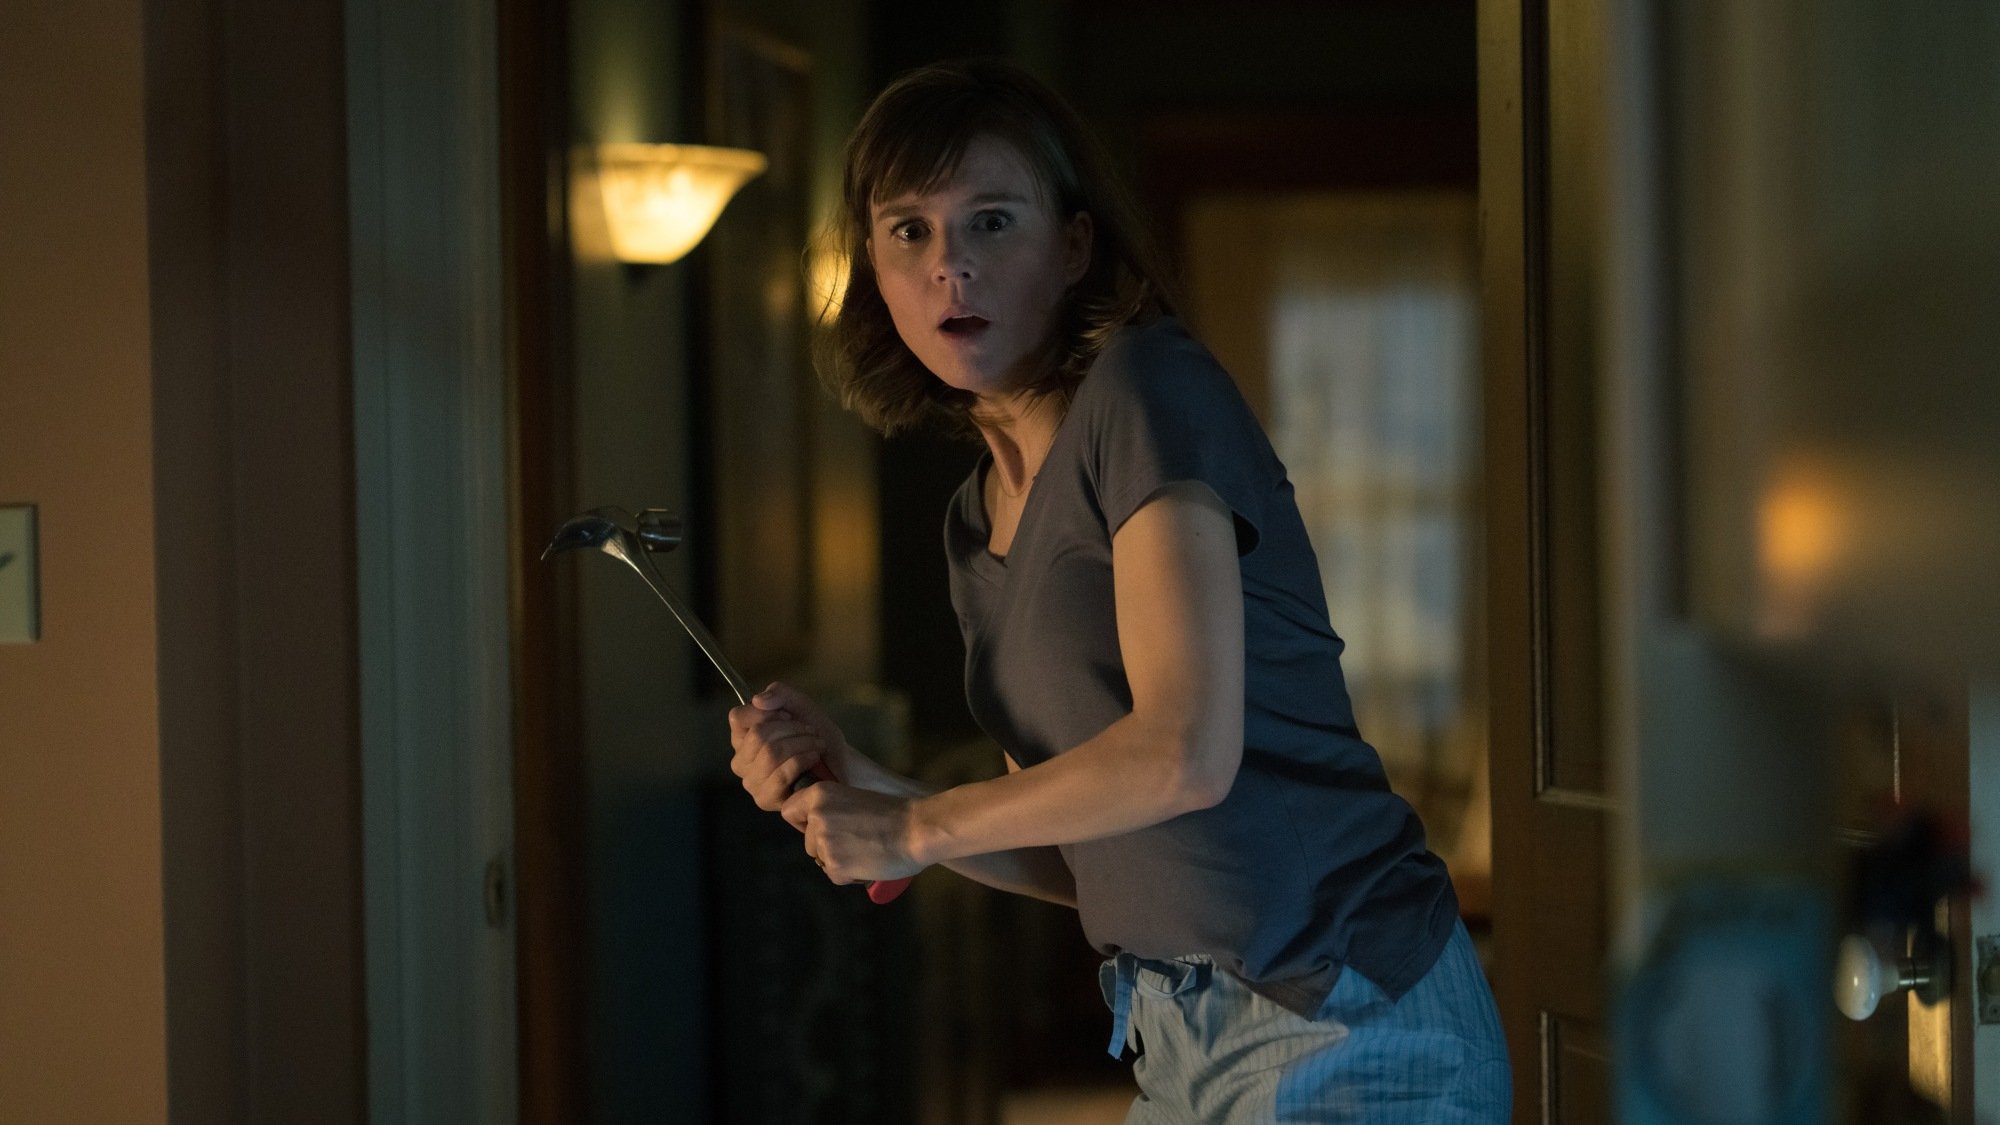 Kristen Bouchard (Katja Herbers) hears something go bump in the night in "Evil."